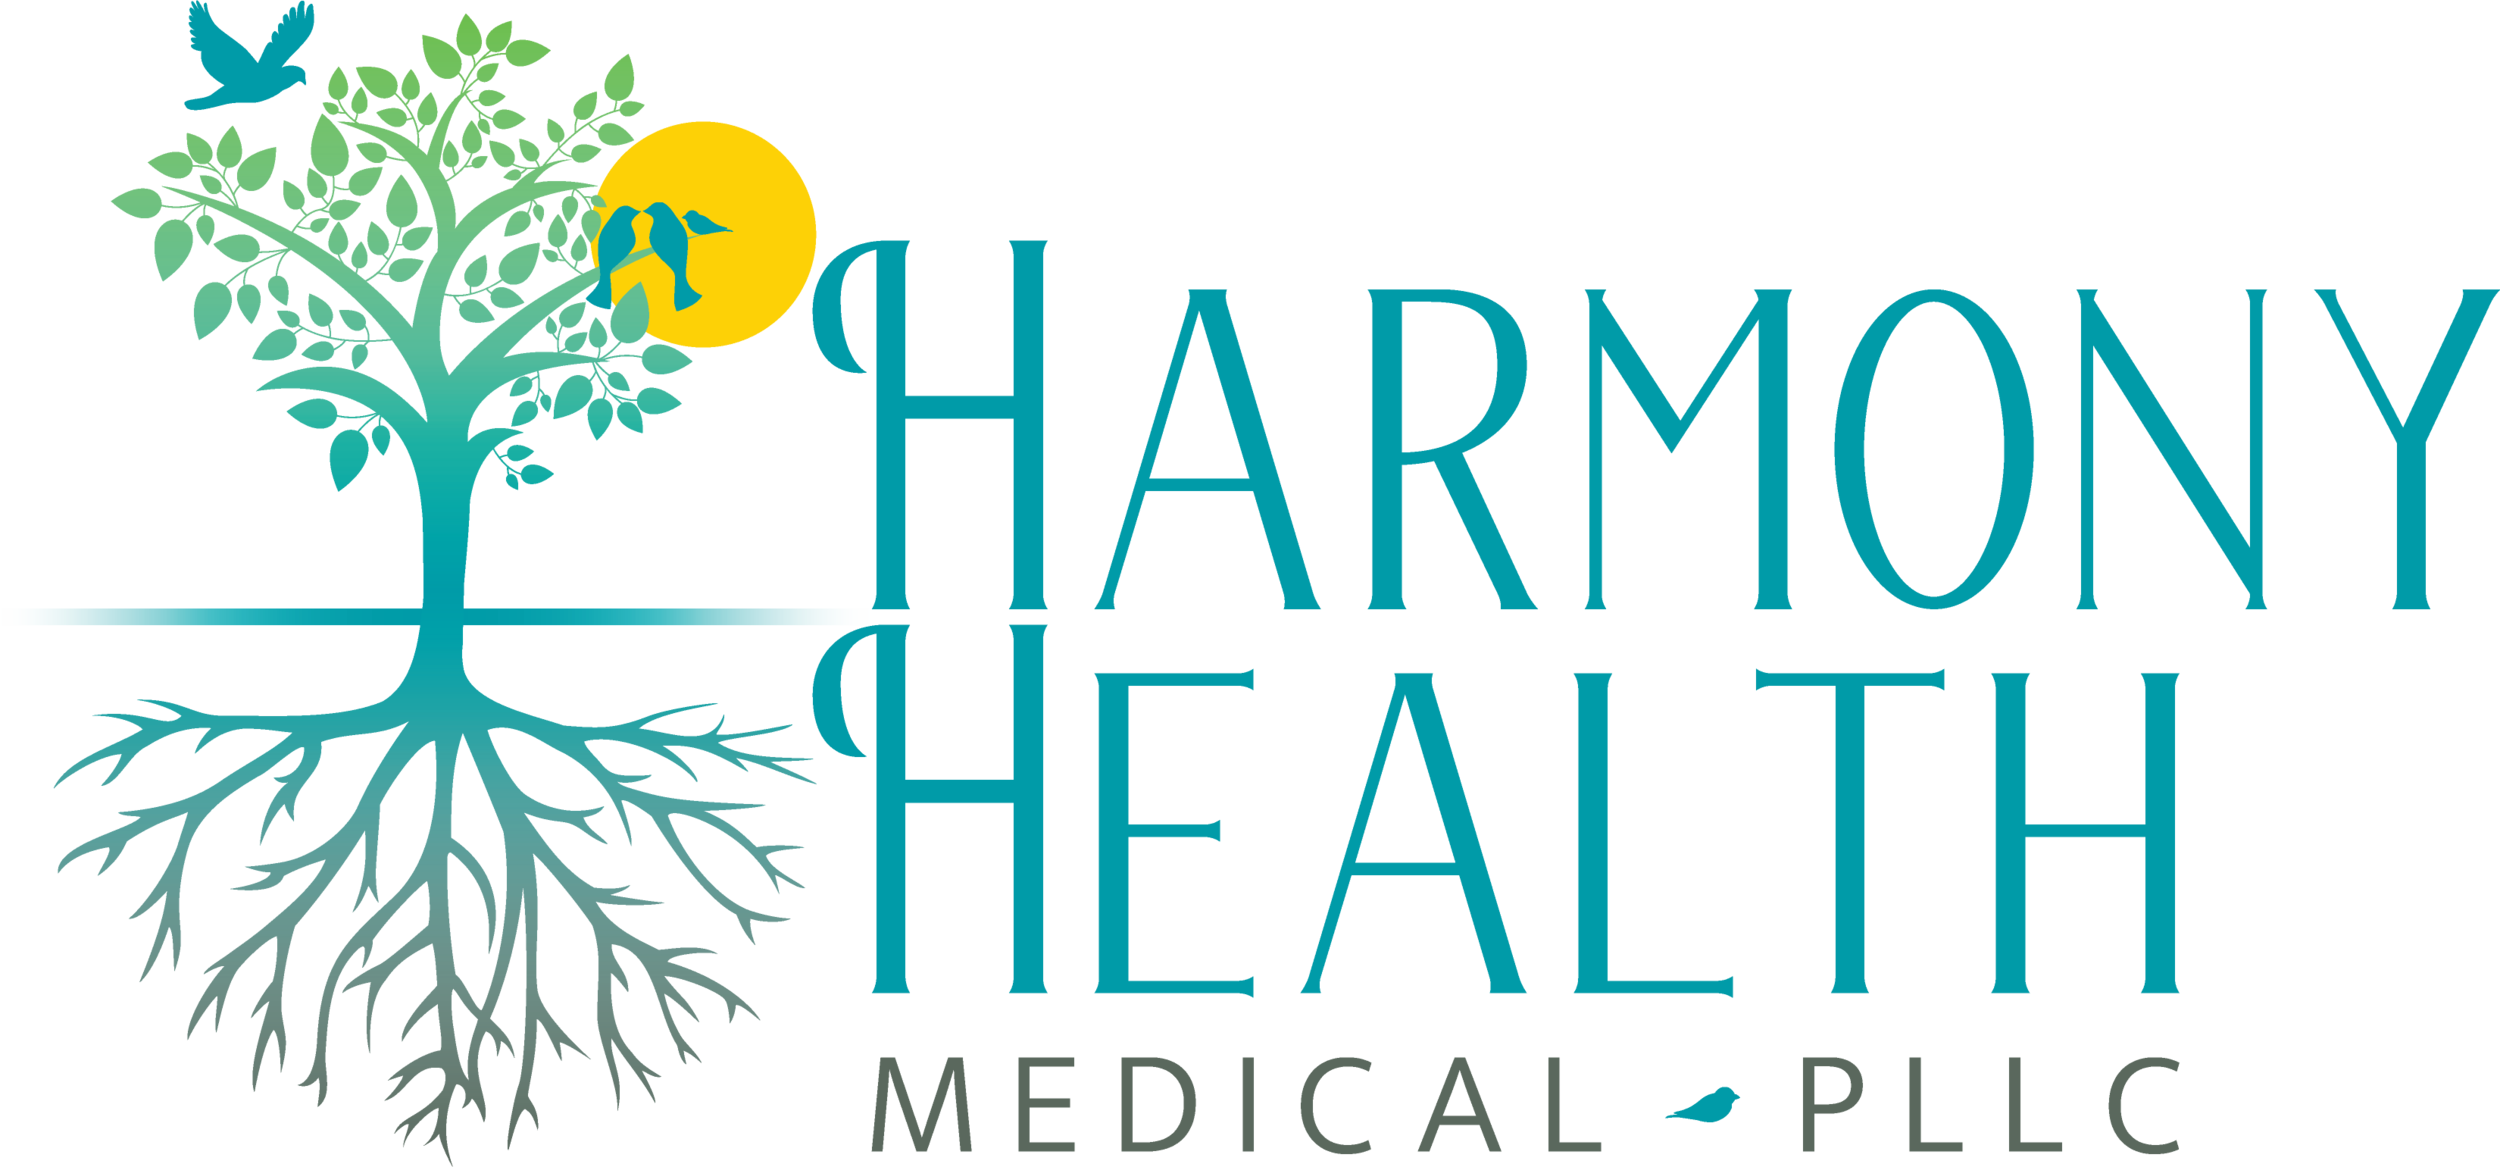 Harmony Health Medical PLLC